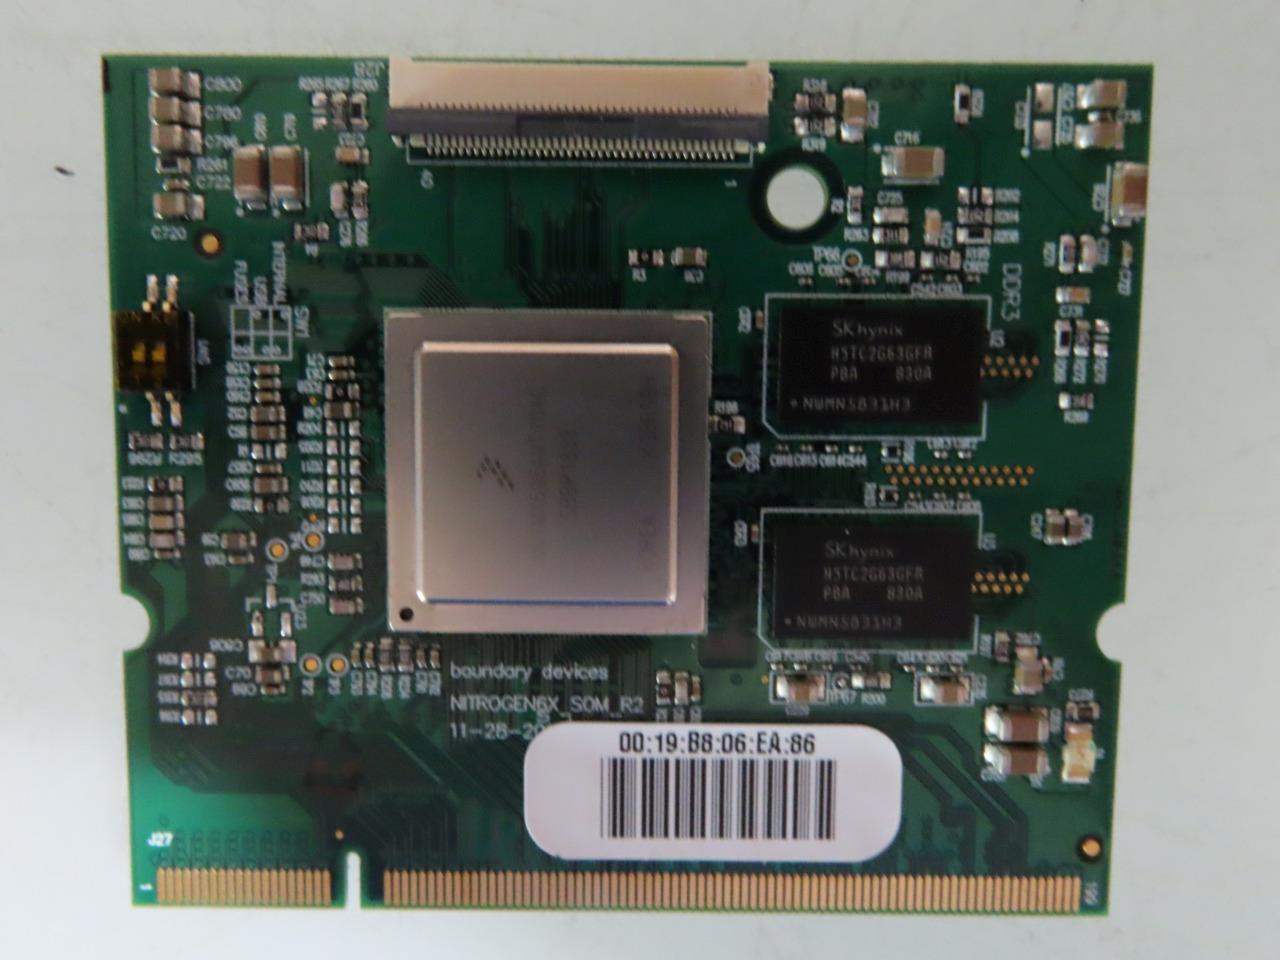 Ezurio Nit6Q_SOM_2GB SOM Nitrogen6 System on Module: i.MX6 Quad / 2GB RAM